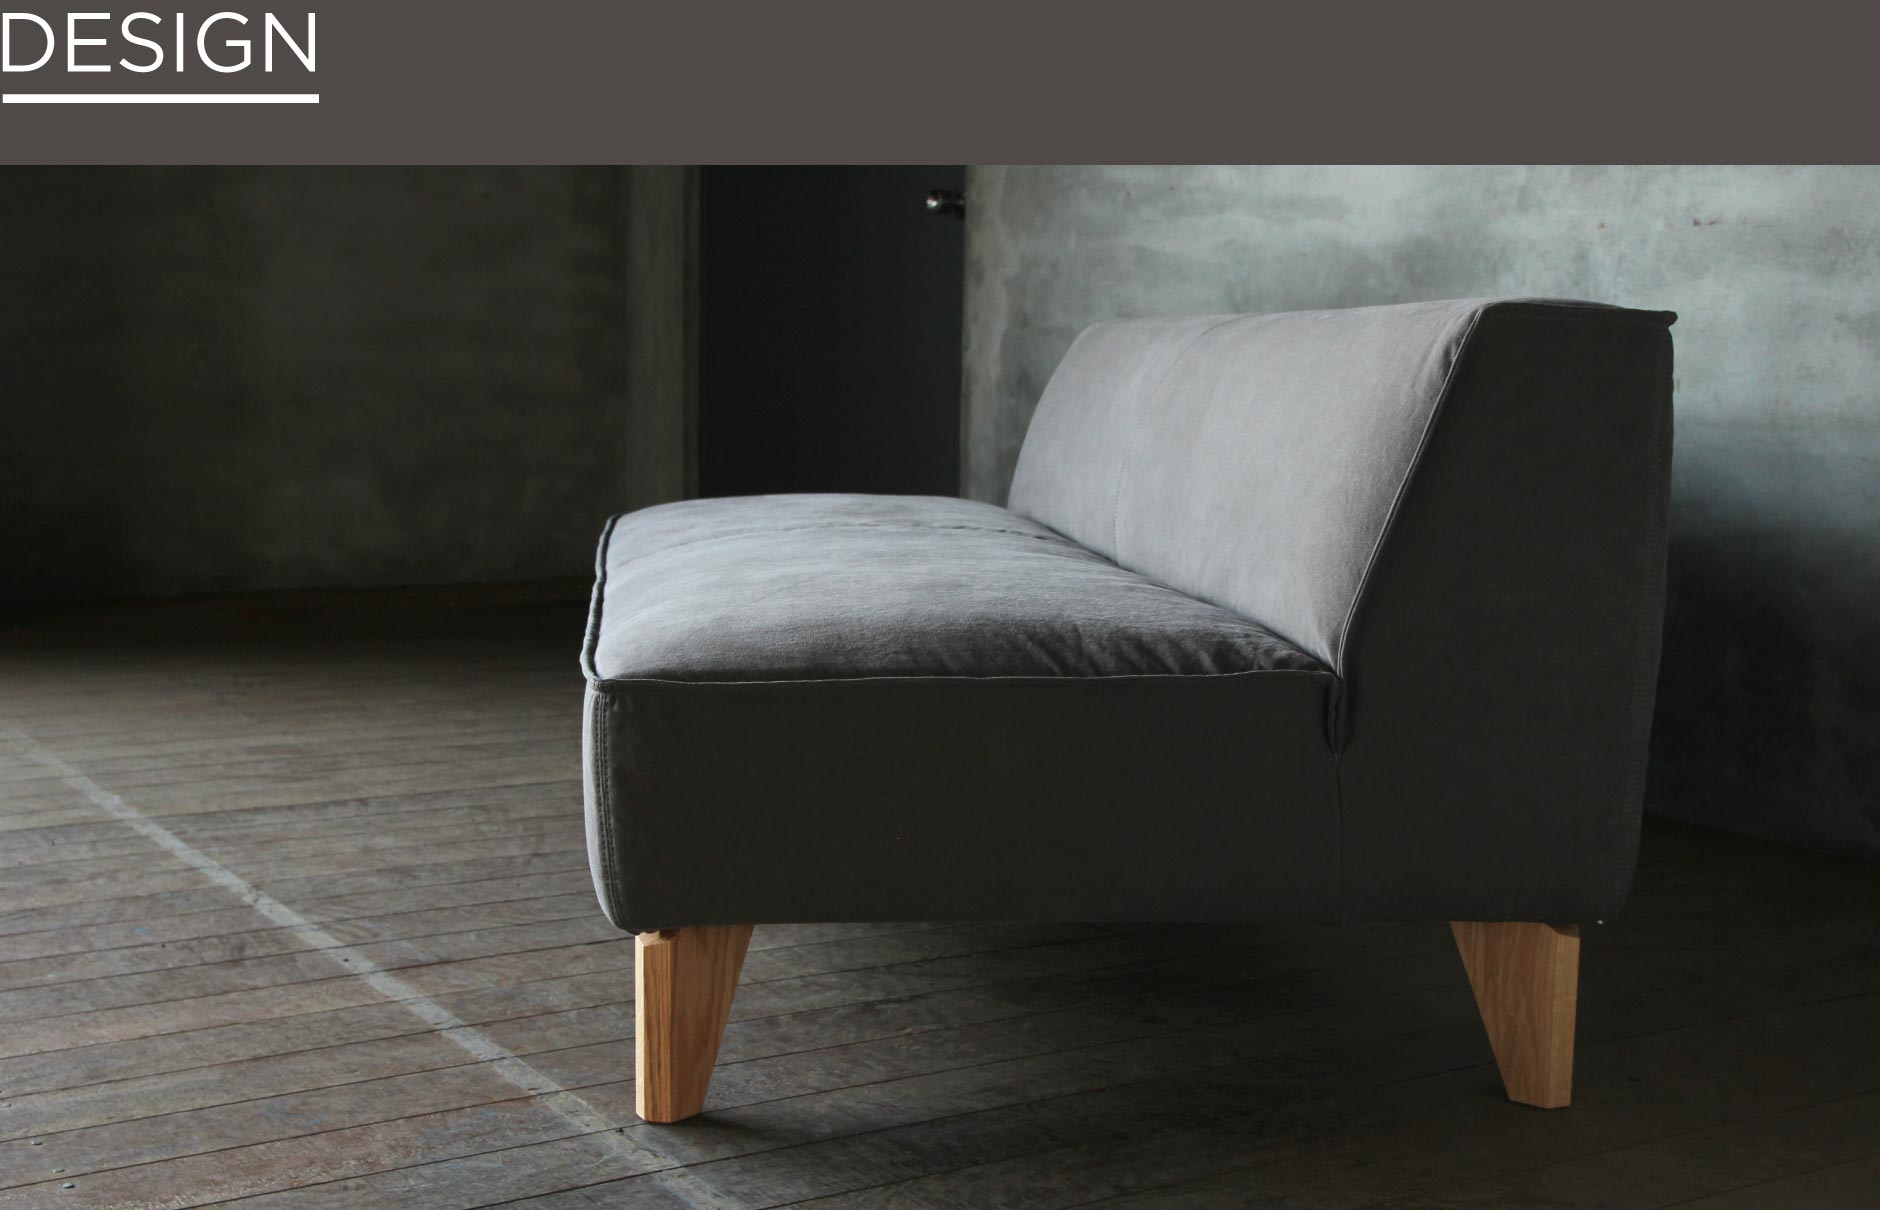 SOLID大阪の家具の中でも人気のアームレスタイプをご用意。ワンアームと組み合わせてコーナーソファとしてもお使いいただけます。